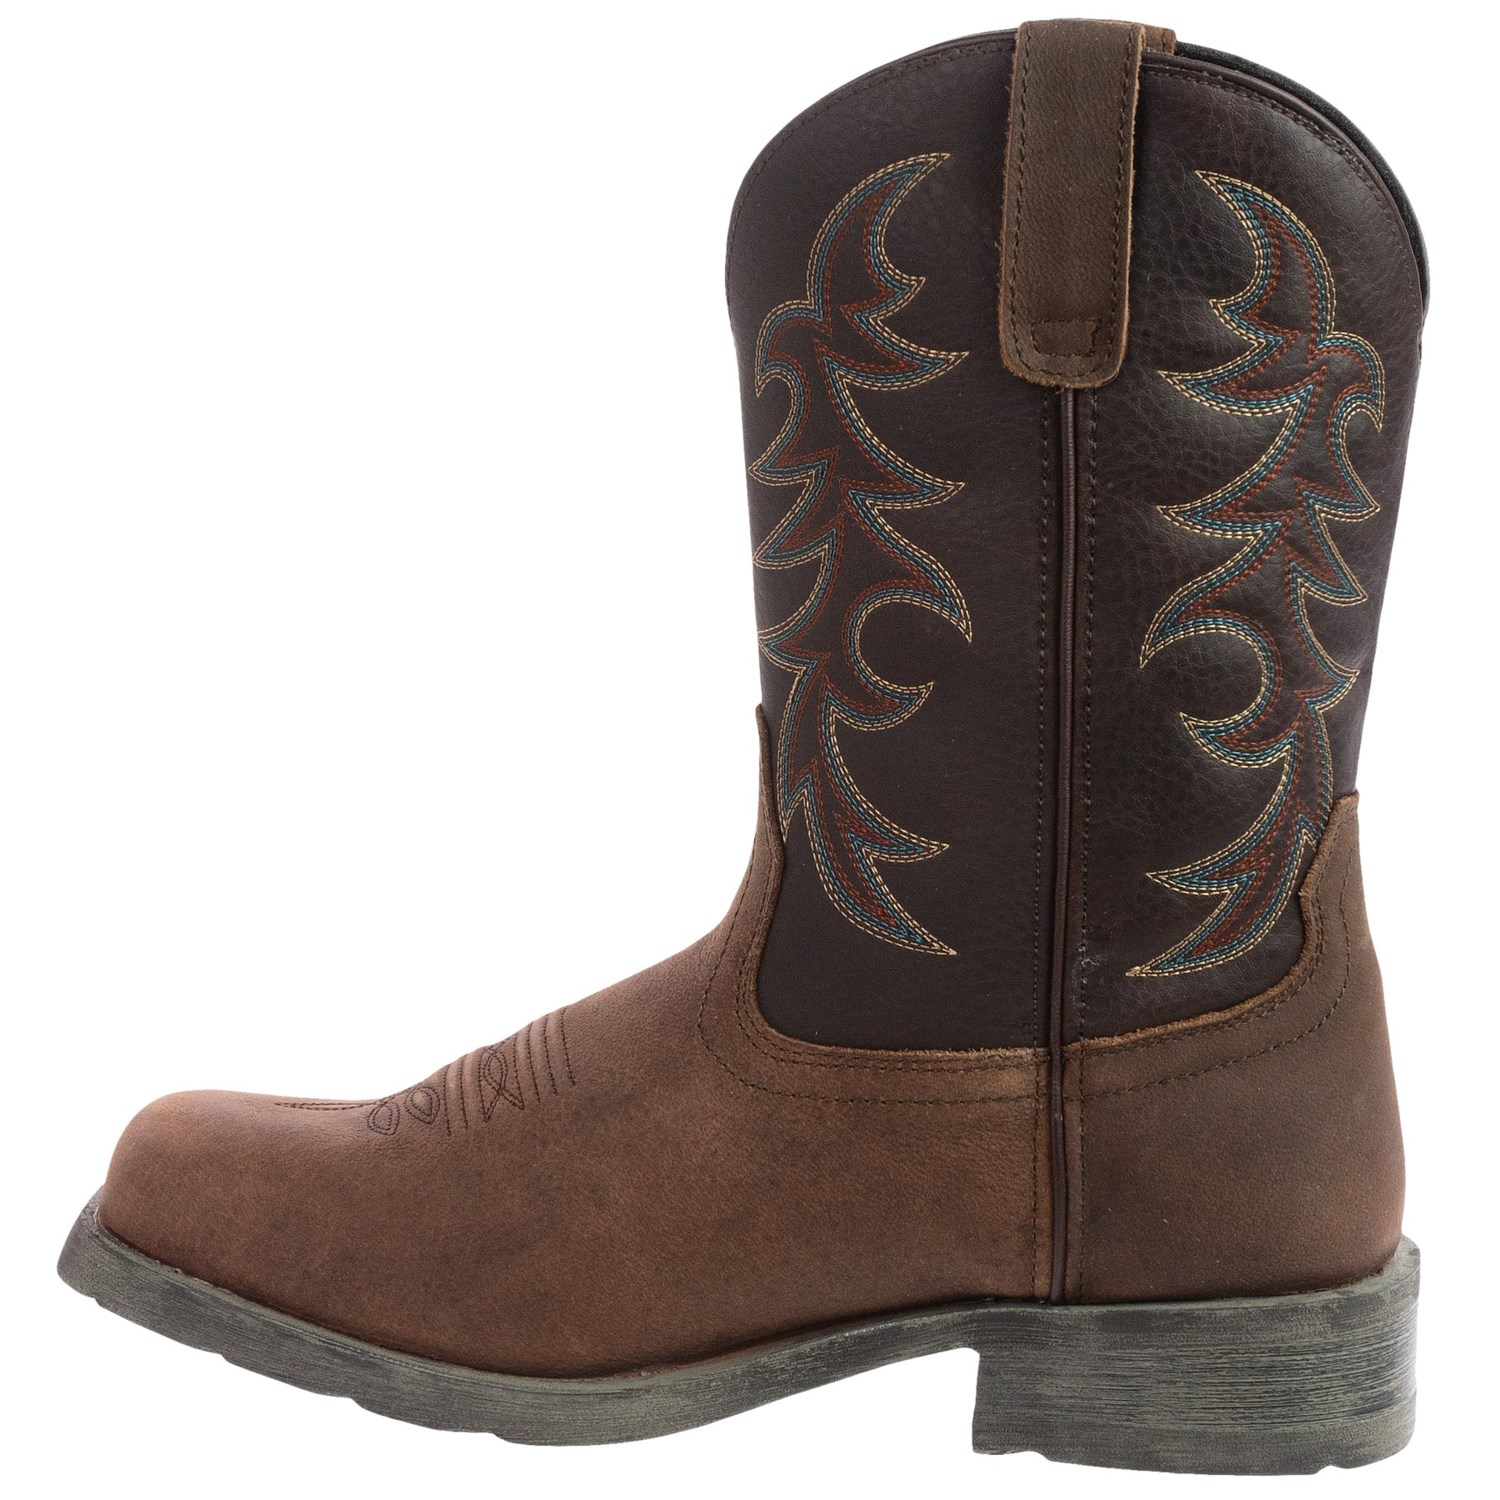 John Deere Footwear Cowboy Boots (For Men) - Save 51%